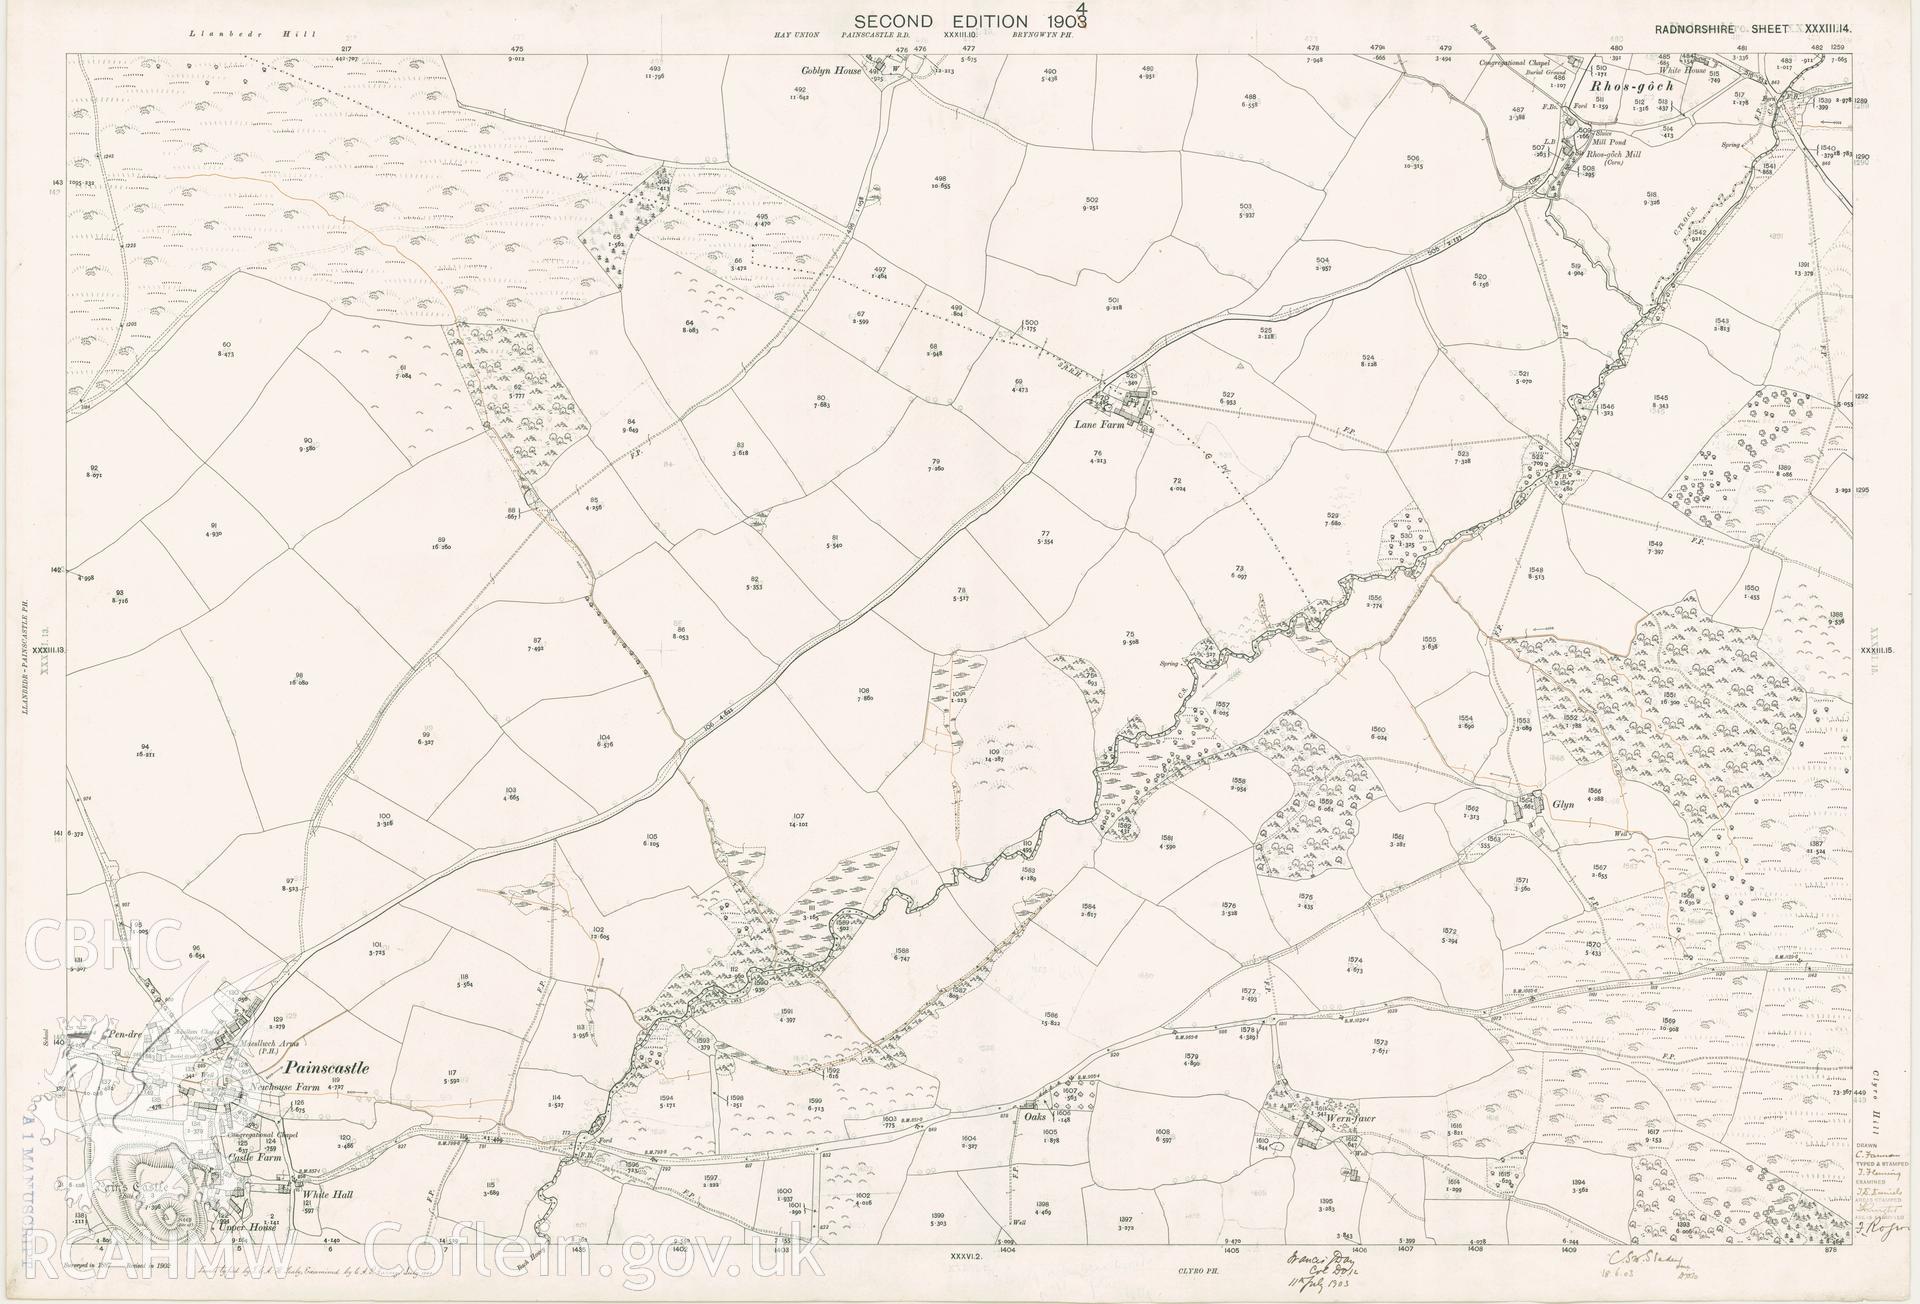 Digitized copy of Ordnance Survey 25 inch coloured map of Painscastle area 1904. Original size.